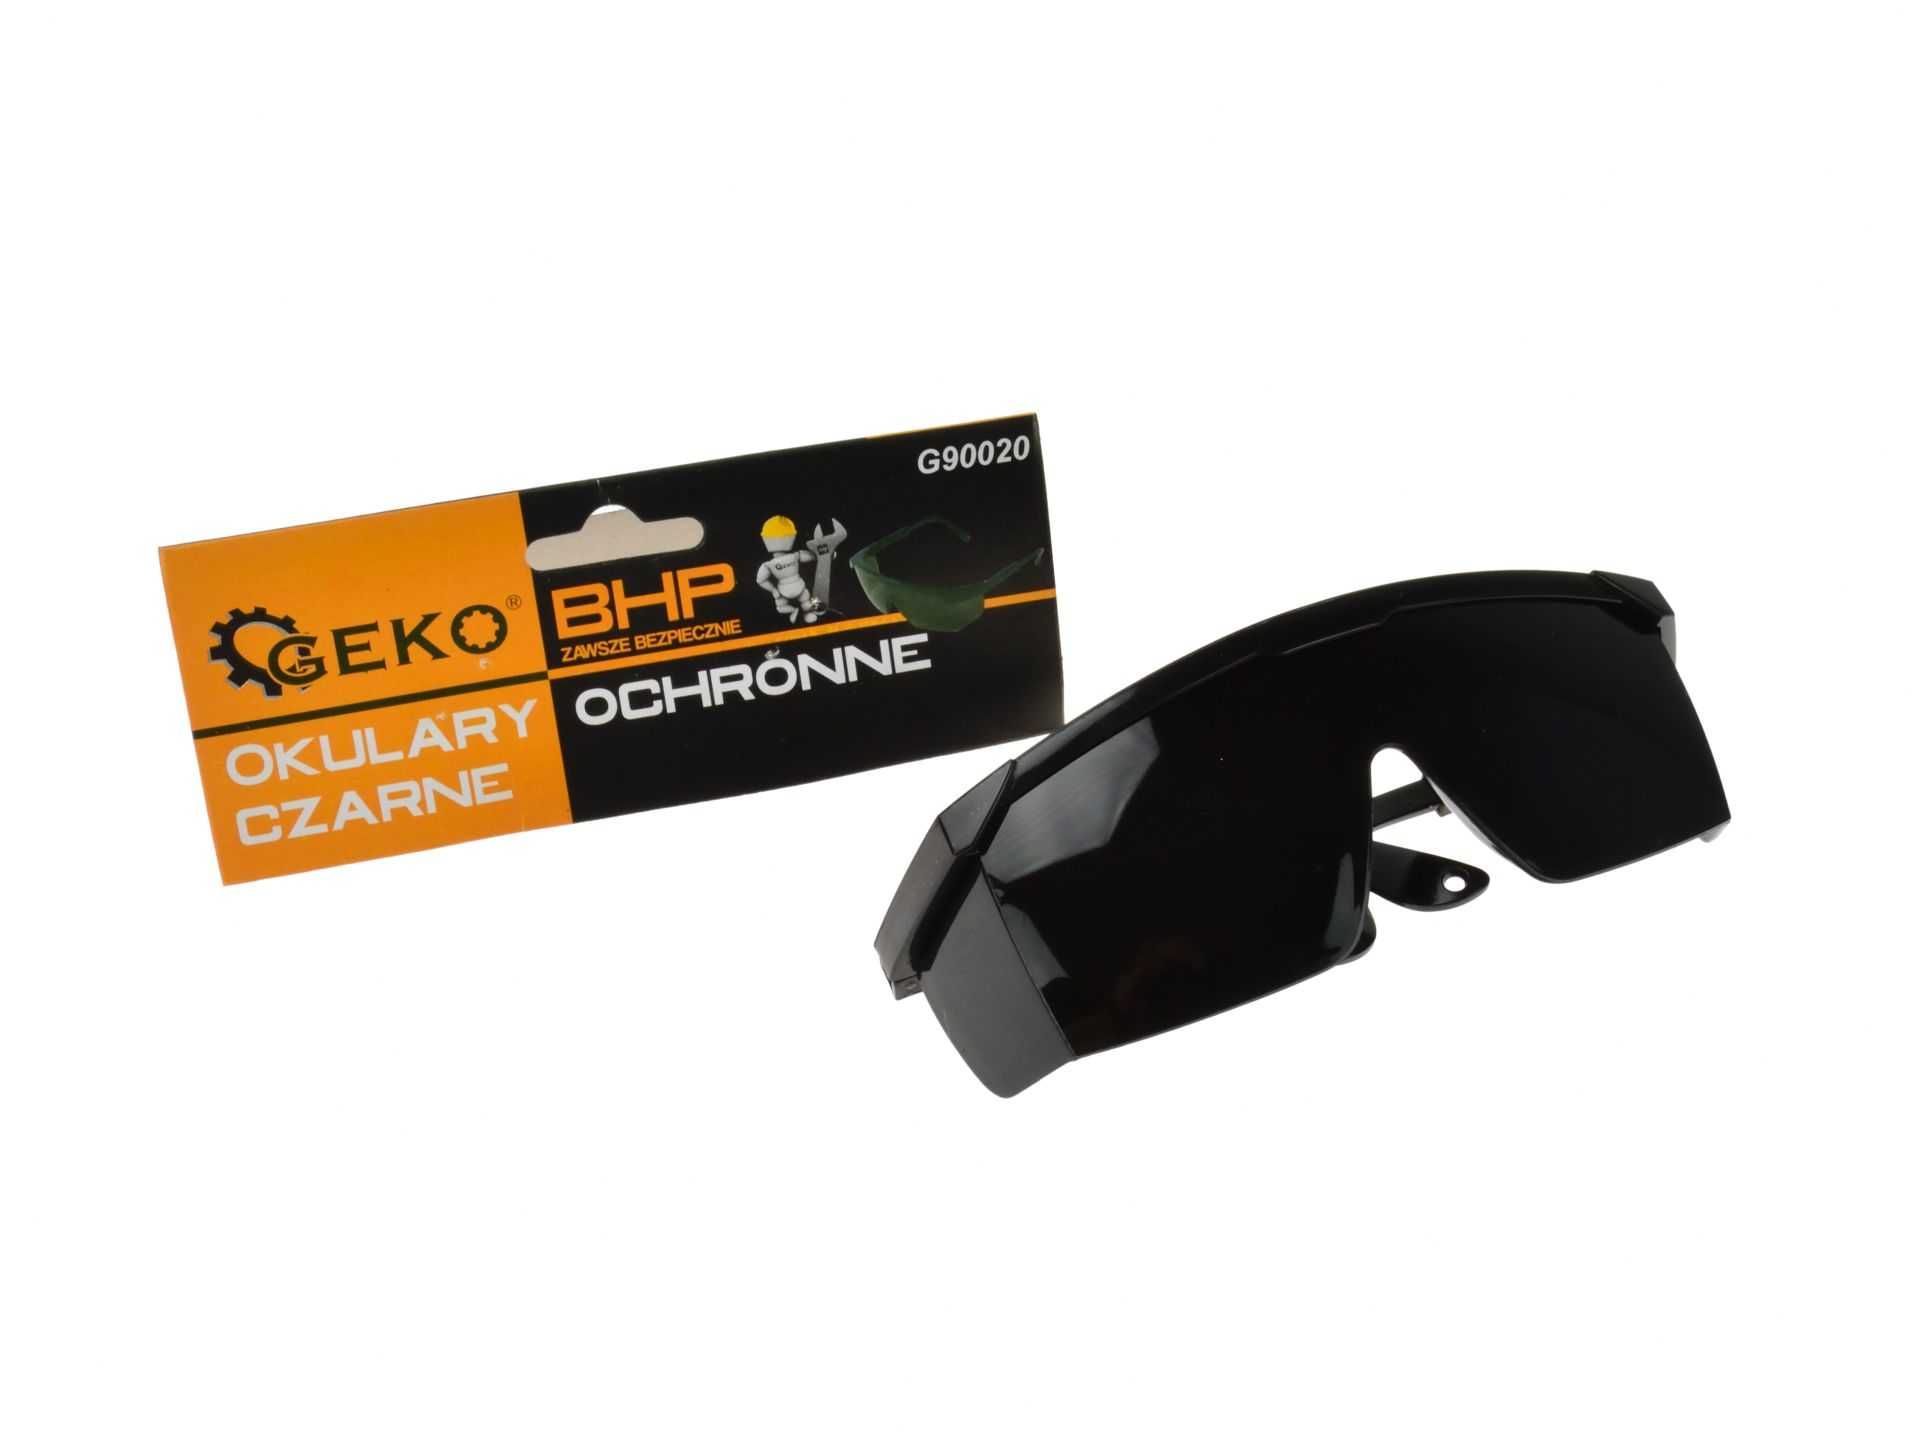 #1551 Okulary ochronne czarne Geko G90020